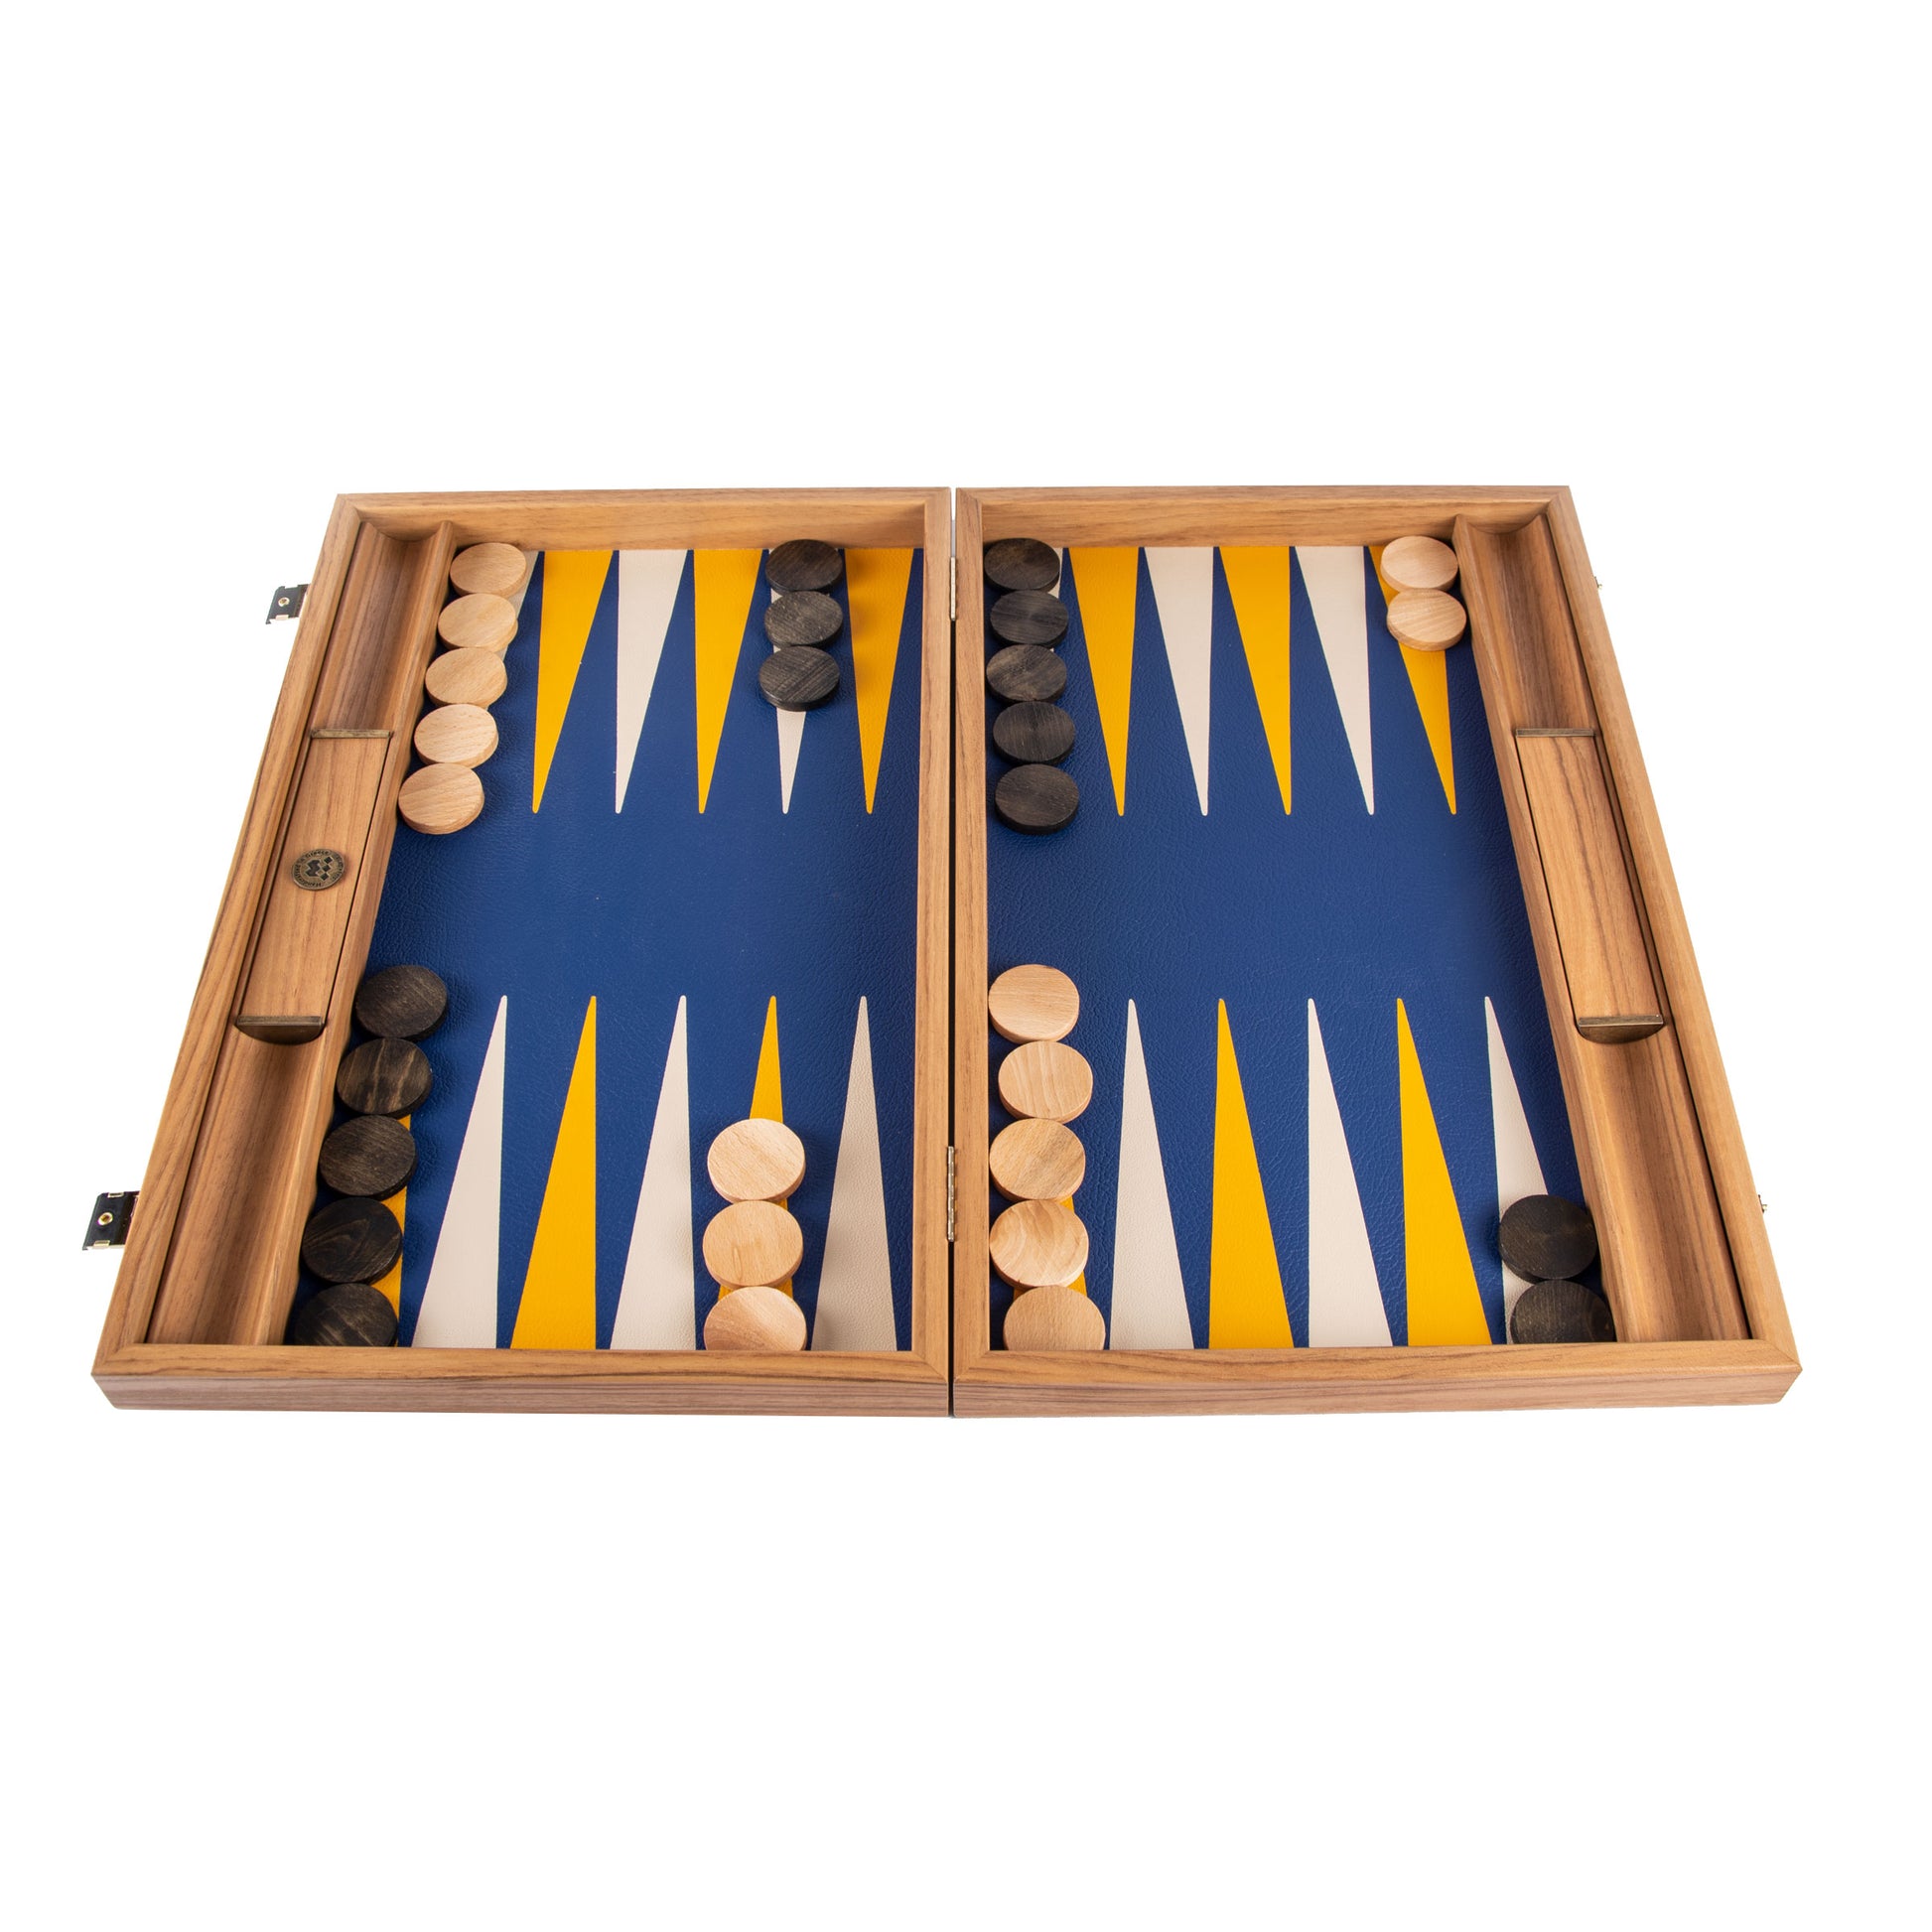 Premium Leatherette Royal Blue Backgammon Set - Premium Backgammon from MANOPOULOS Chess & Backgammon - Just €175! Shop now at MANOPOULOS Chess & Backgammon